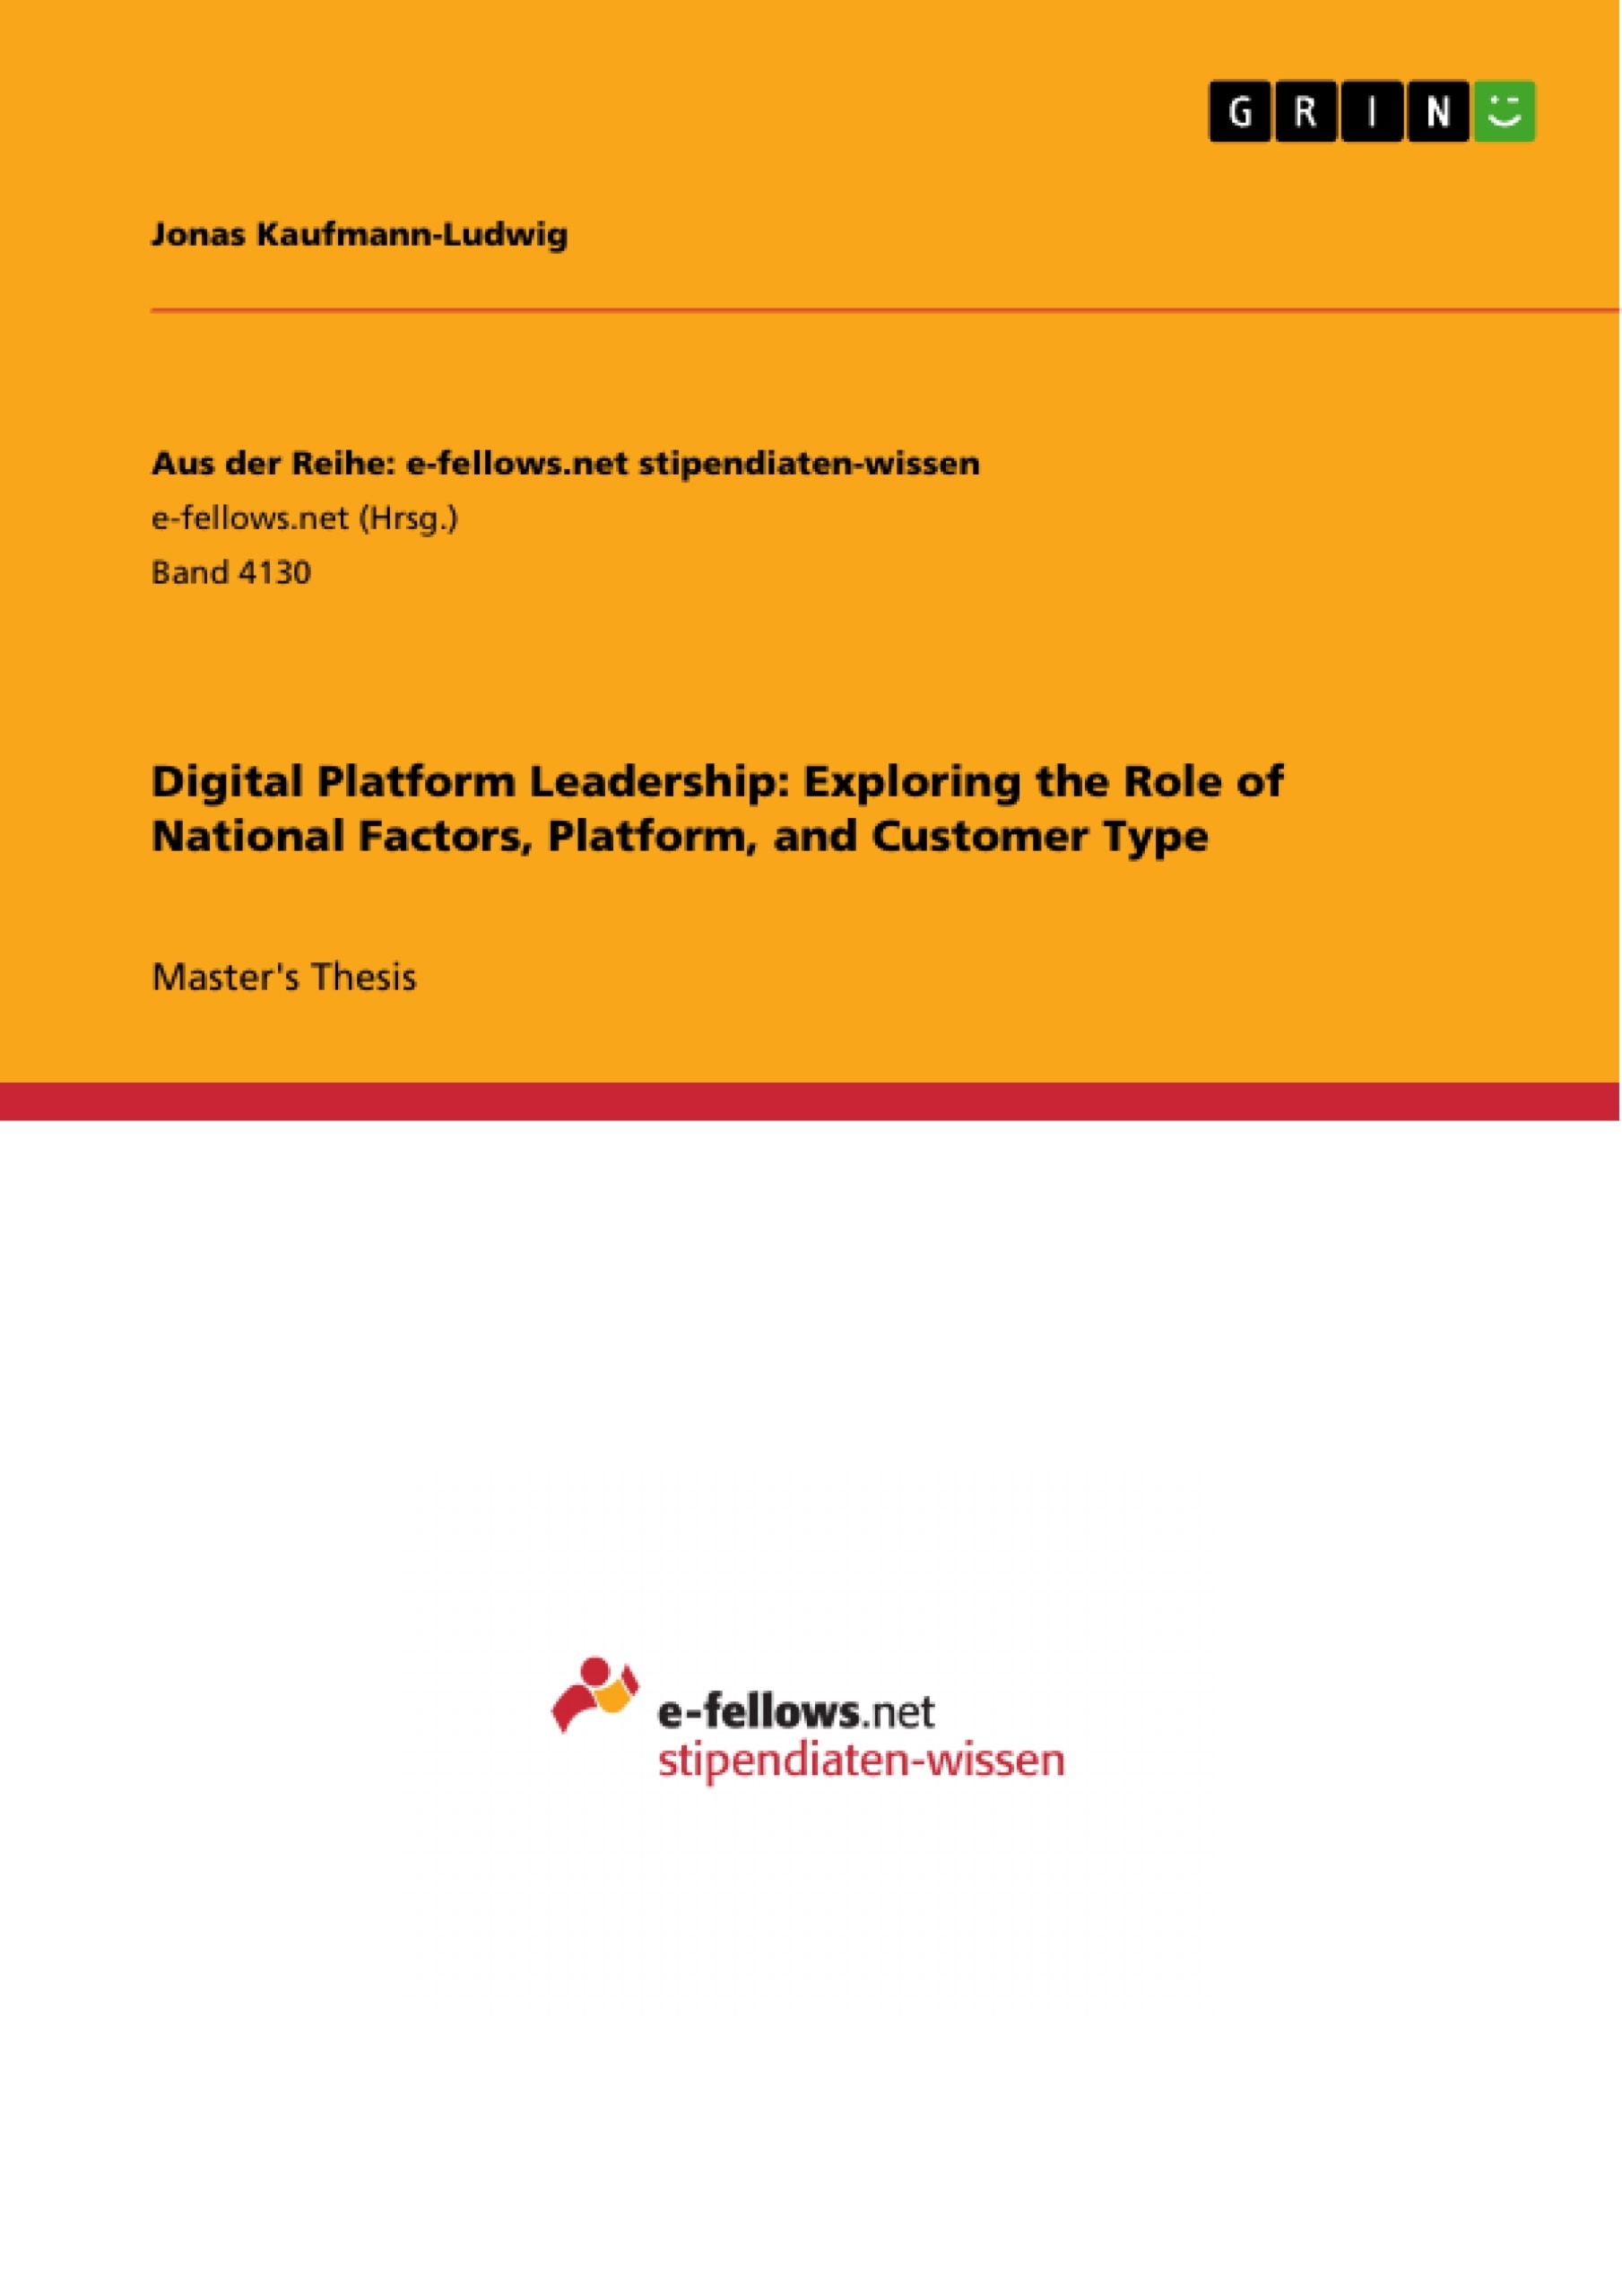 Title: Digital Platform Leadership: Exploring the Role of National Factors, Platform, and Customer Type